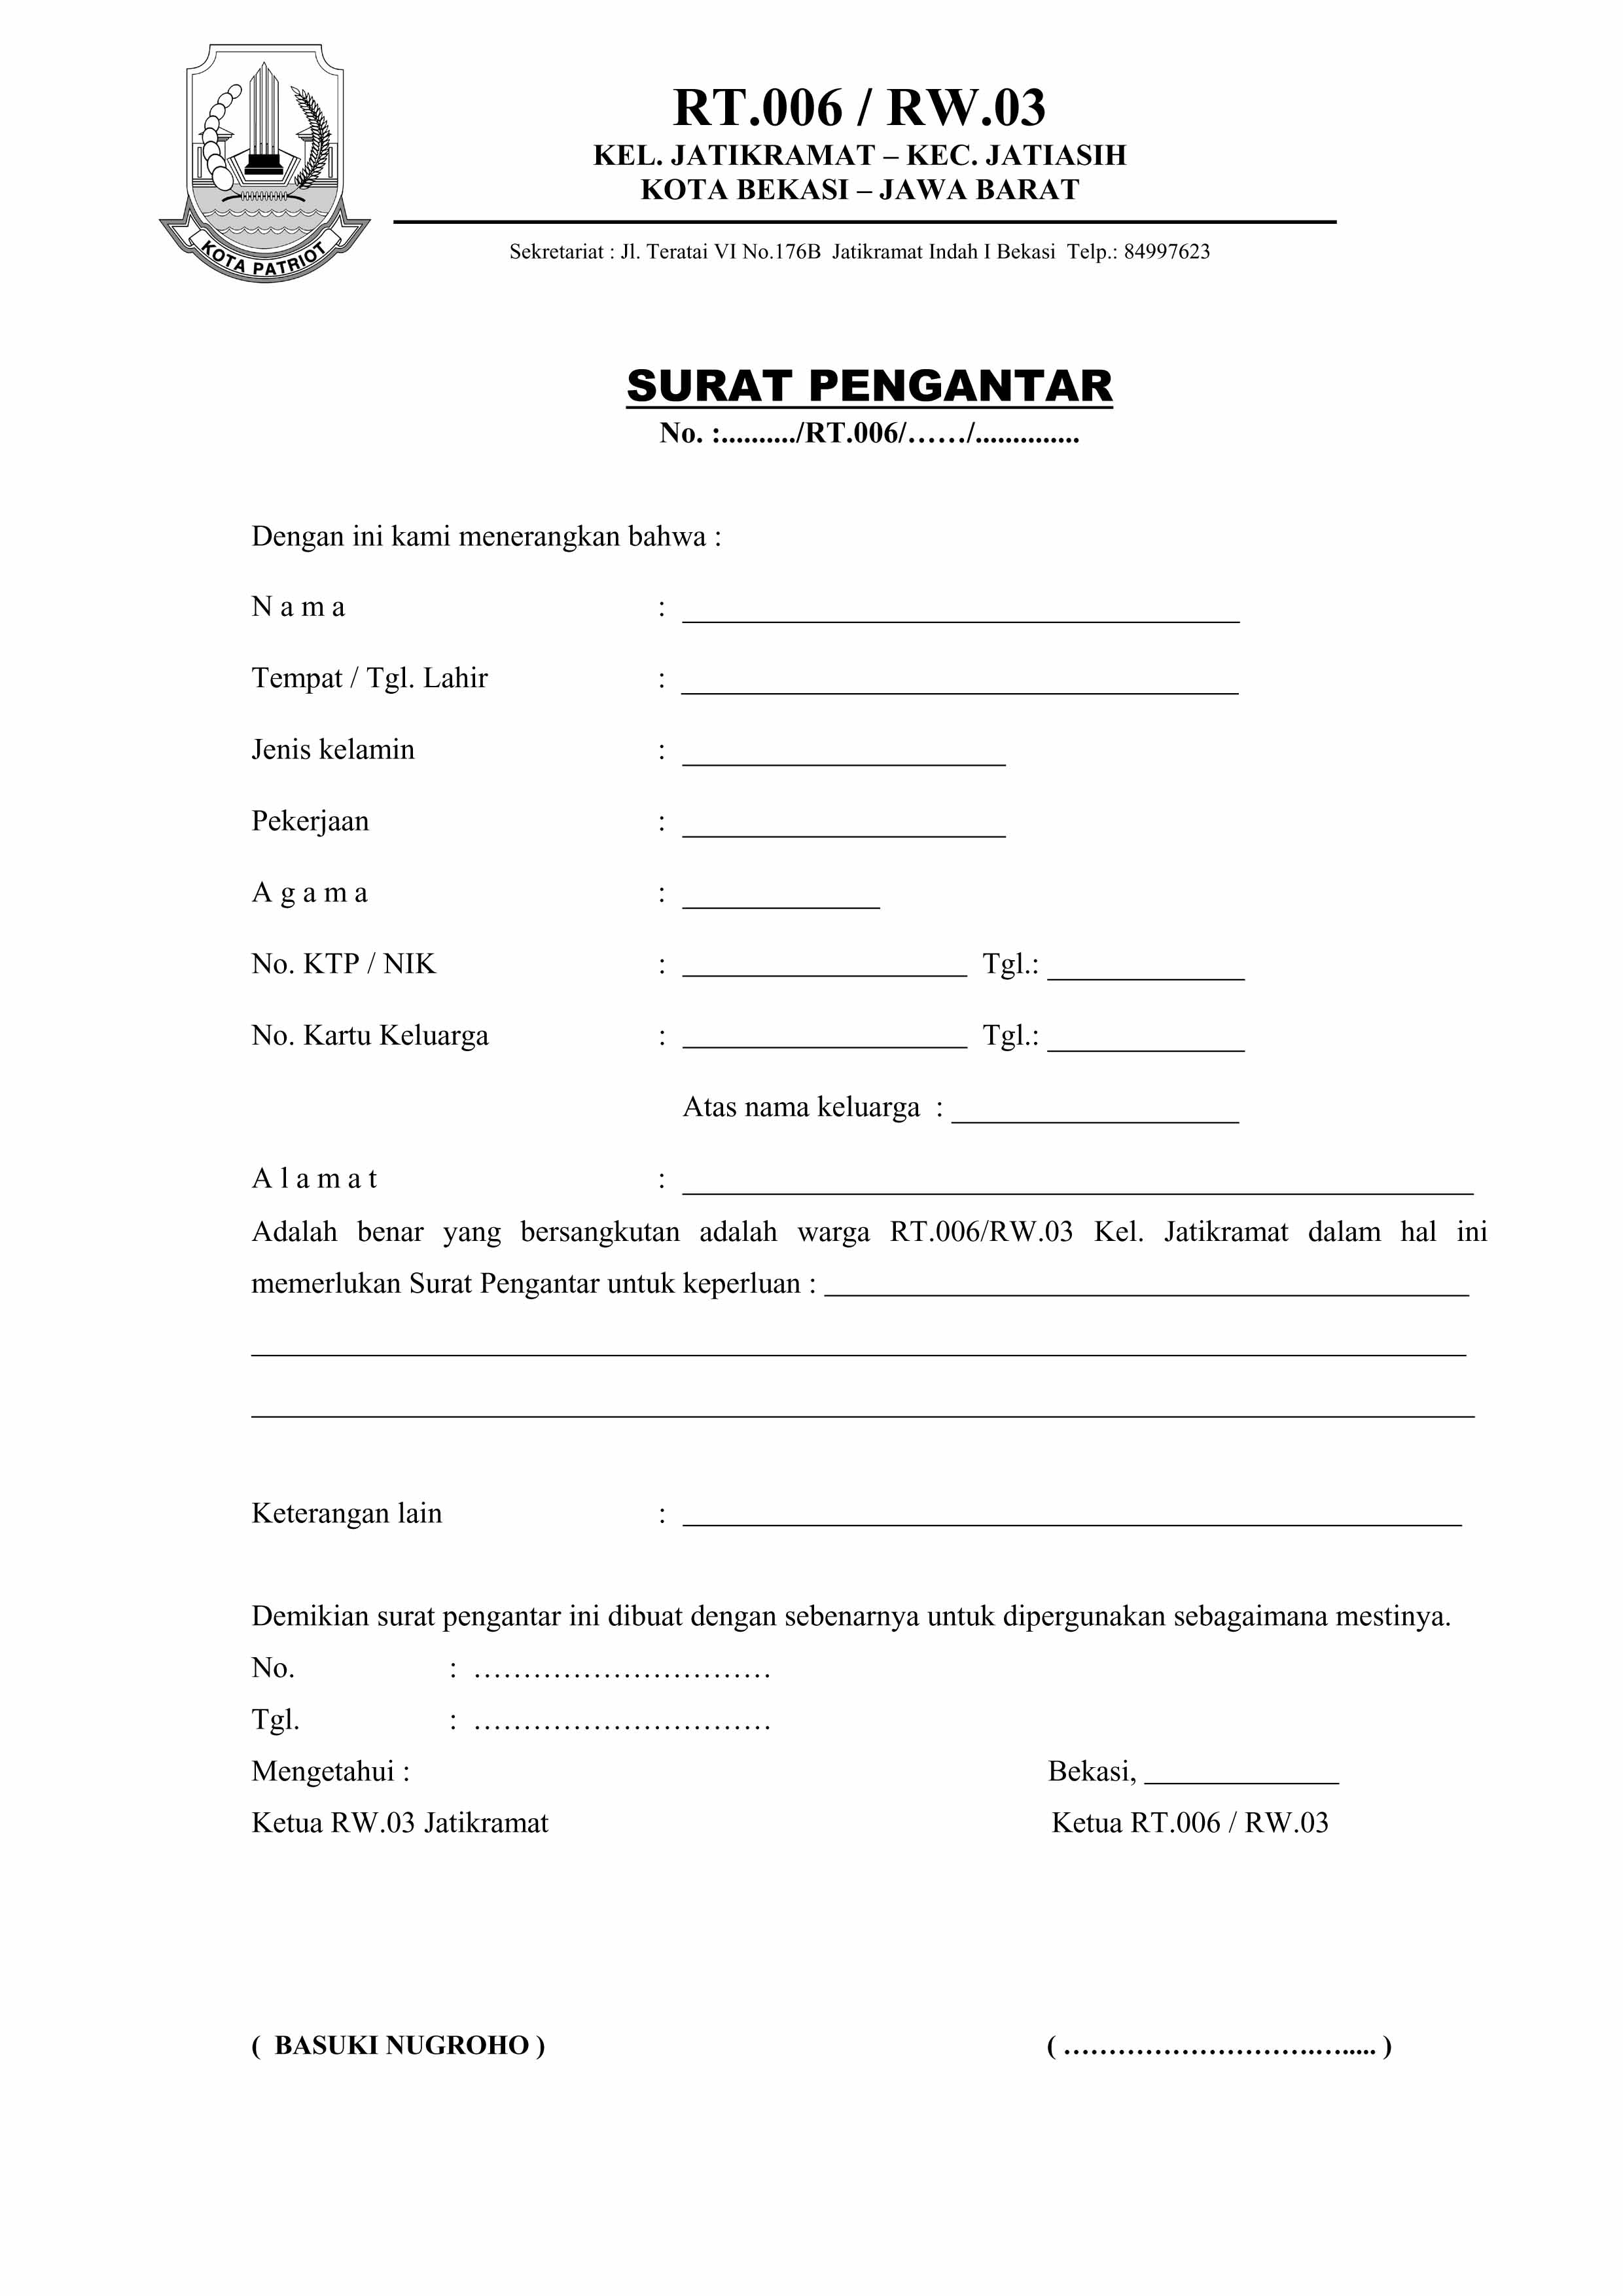 Form Surat Pengantar RT  RW03 Jatikramat Indah 1